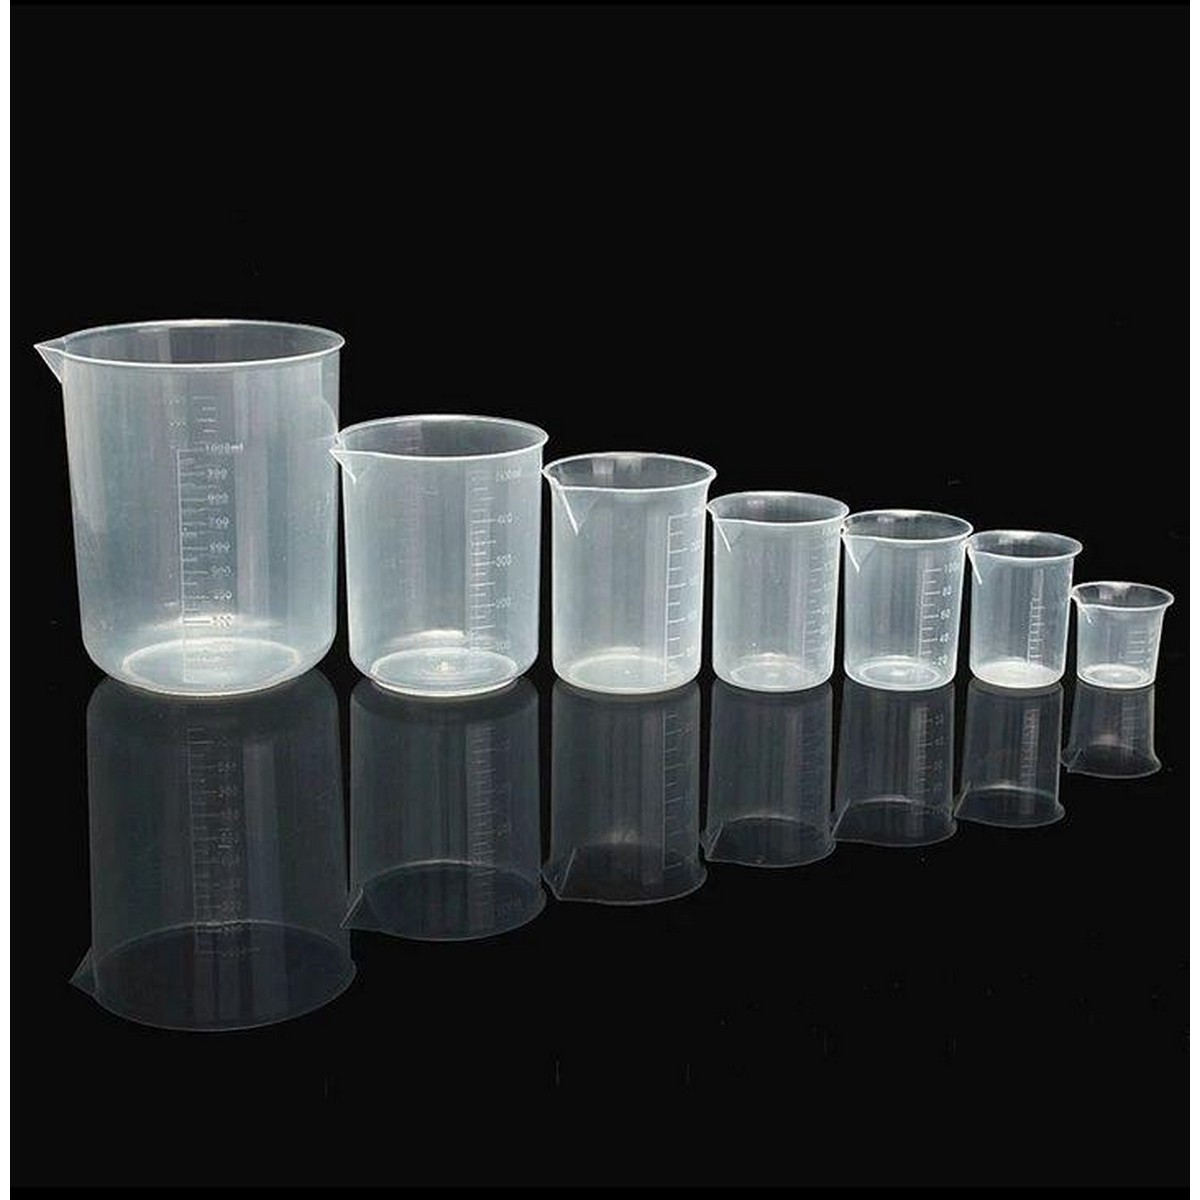 50ml 100ml 150ml 250ml 500ml 1000ml 6 Pcs Laboratory Plastic Beakers Graduated Volumetric Beaker Container Measuring Cup Tool Buy Online At Best Prices In Pakistan Daraz Pk